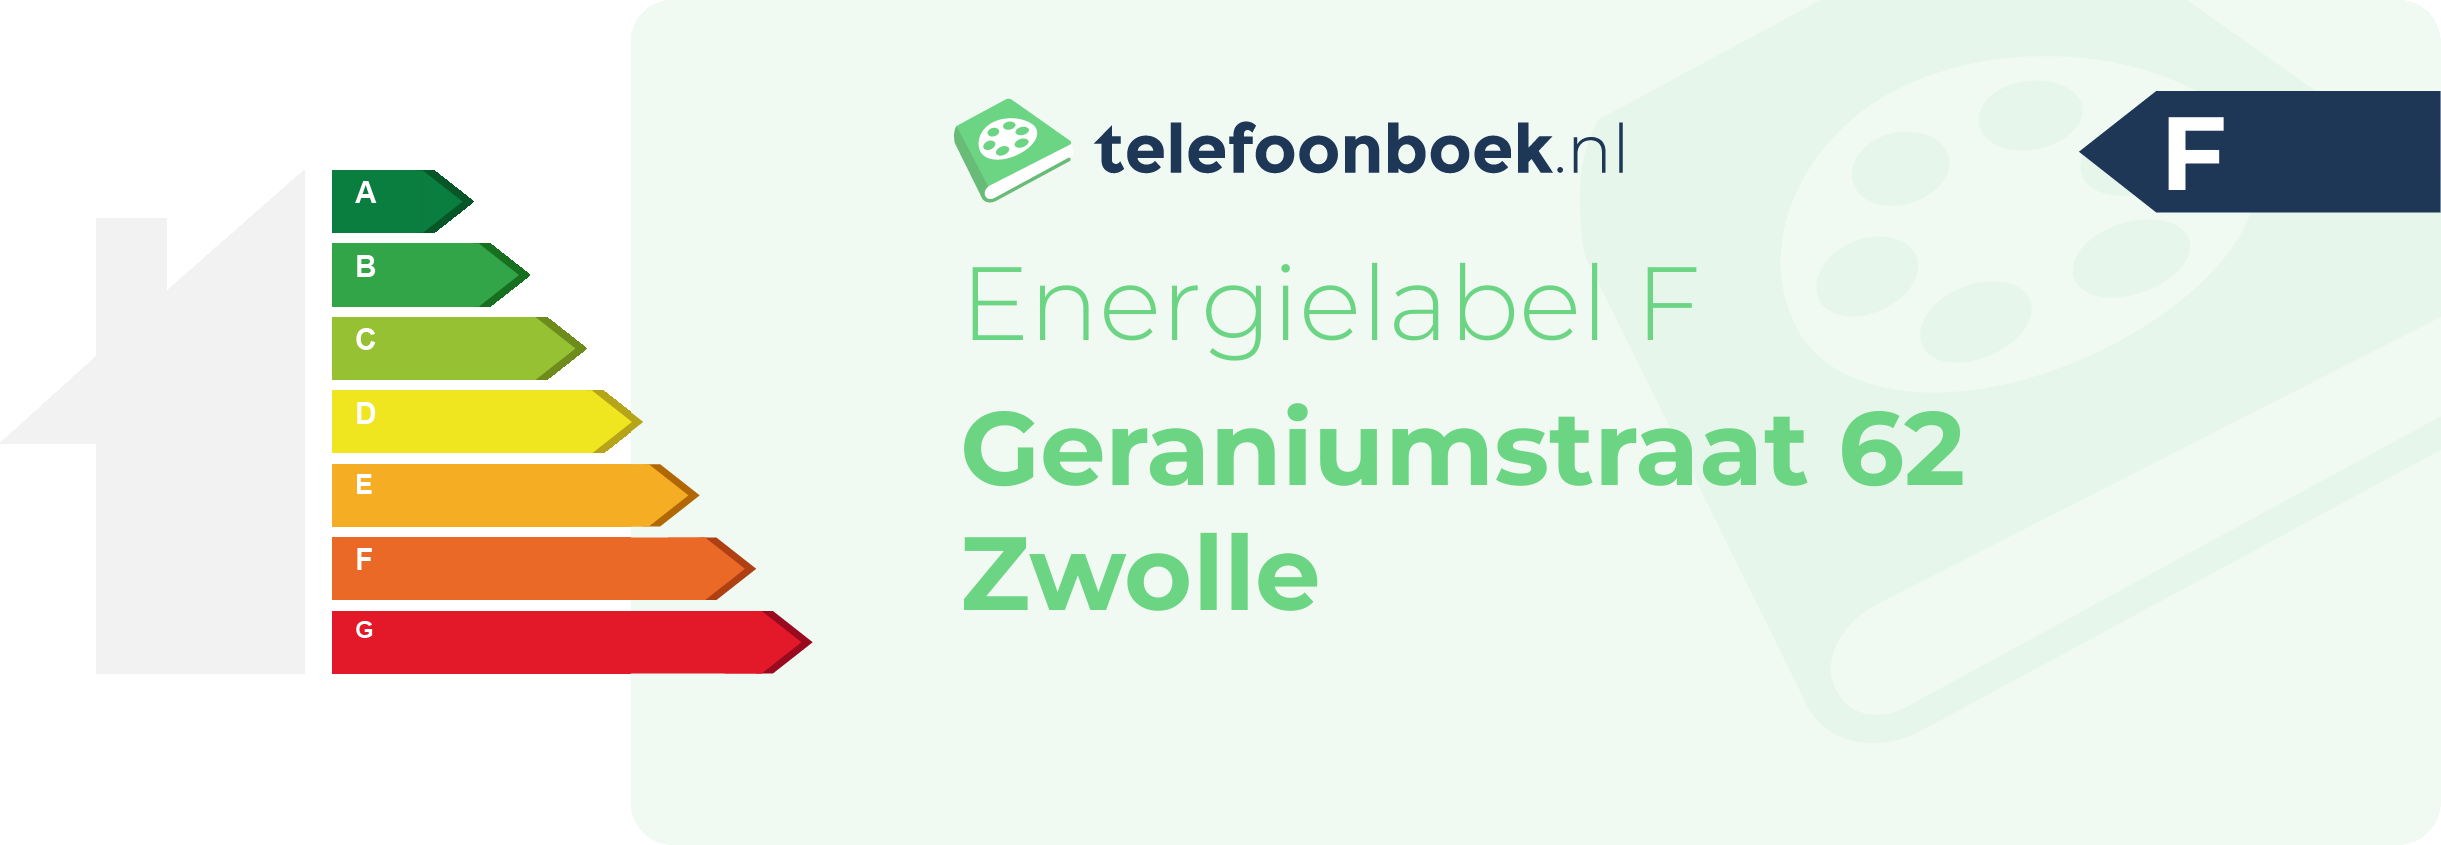 Energielabel Geraniumstraat 62 Zwolle